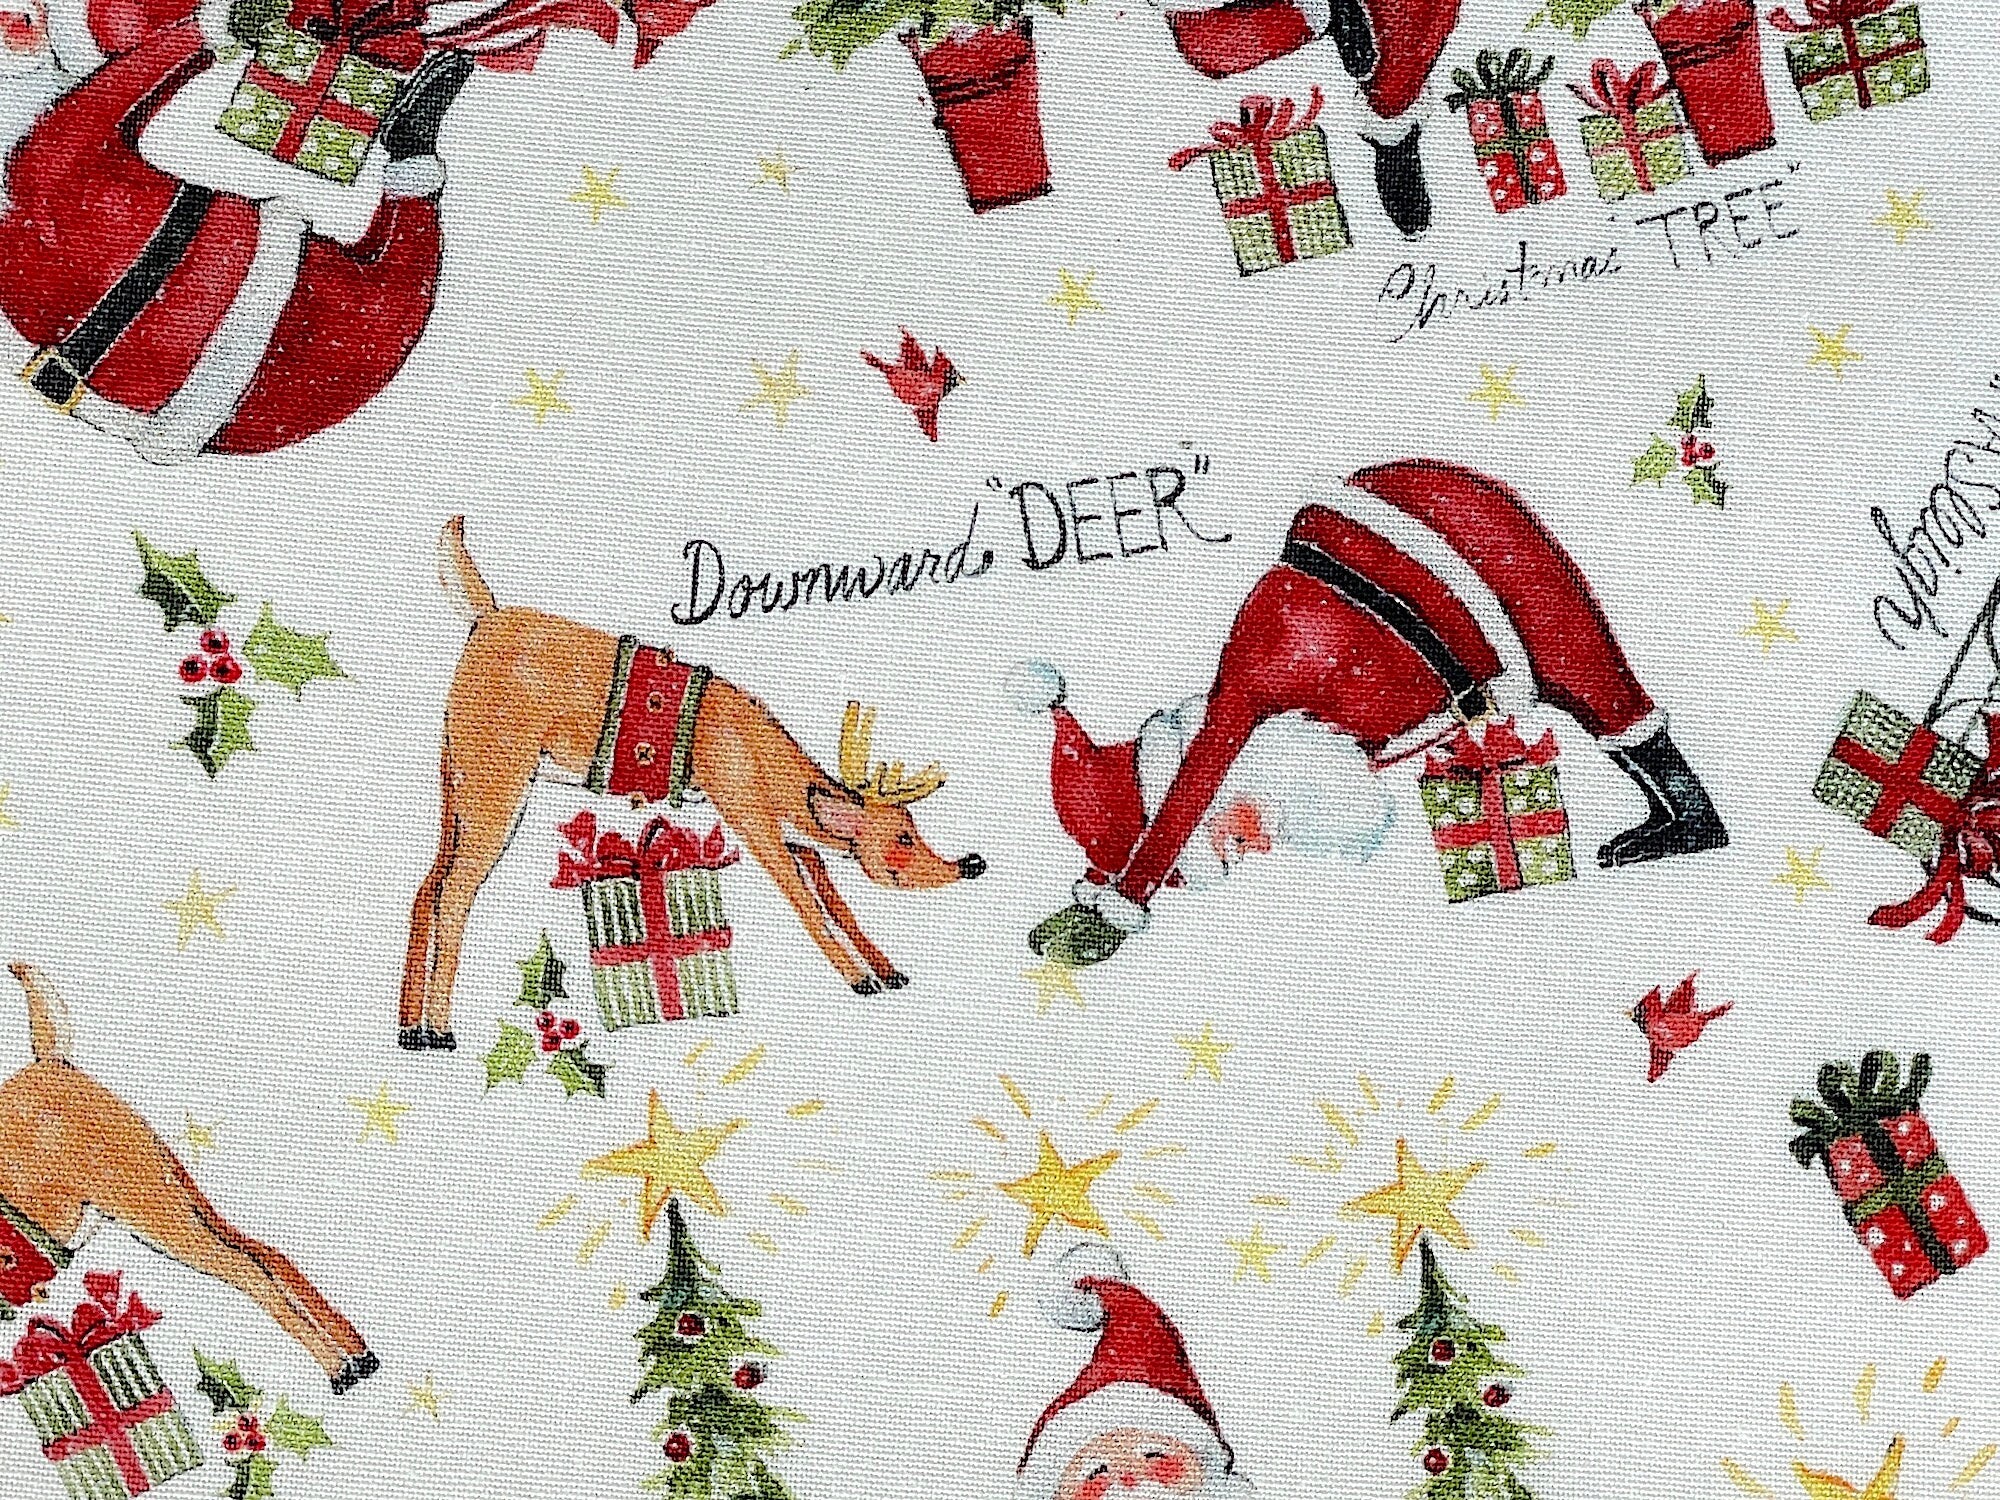 Close up of a reindeer and Santa doing the downward deer pose.